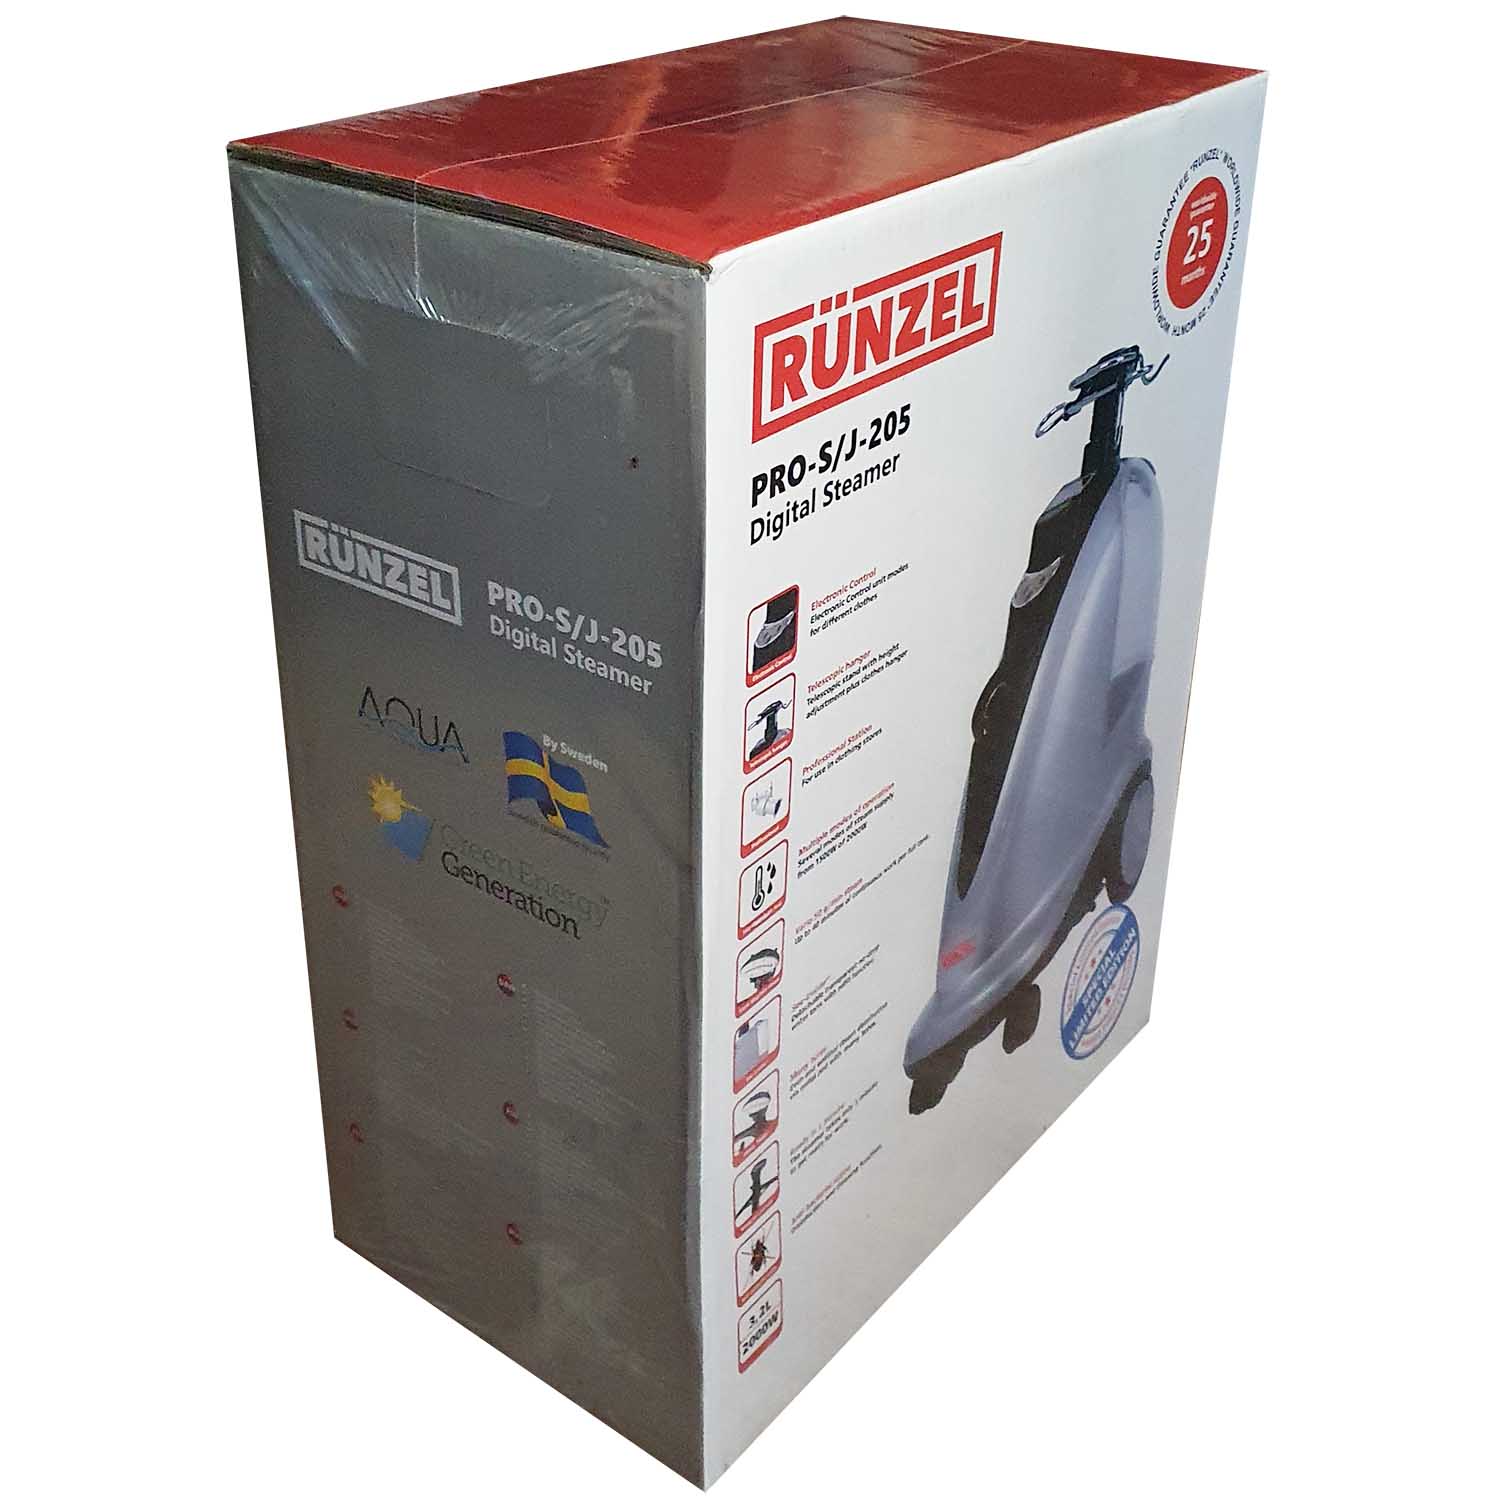 Отпариватель Runzel Pro-S/J-205 Digital Steamer - упаковка, коробка